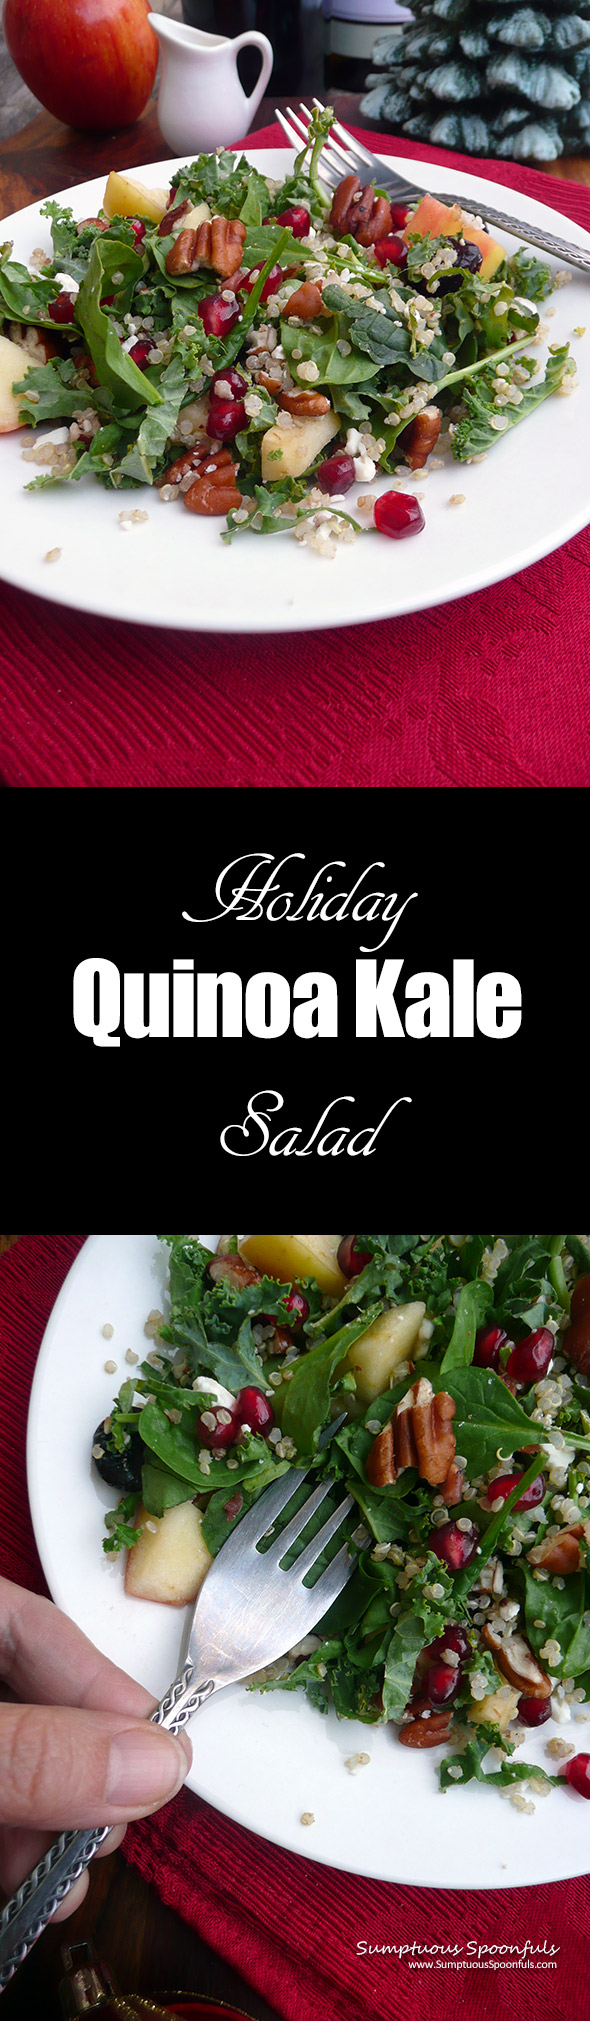 Holiday Quinoa Kale Salad ~ Sumptuous Spoonfuls #holiday #salad #recipe